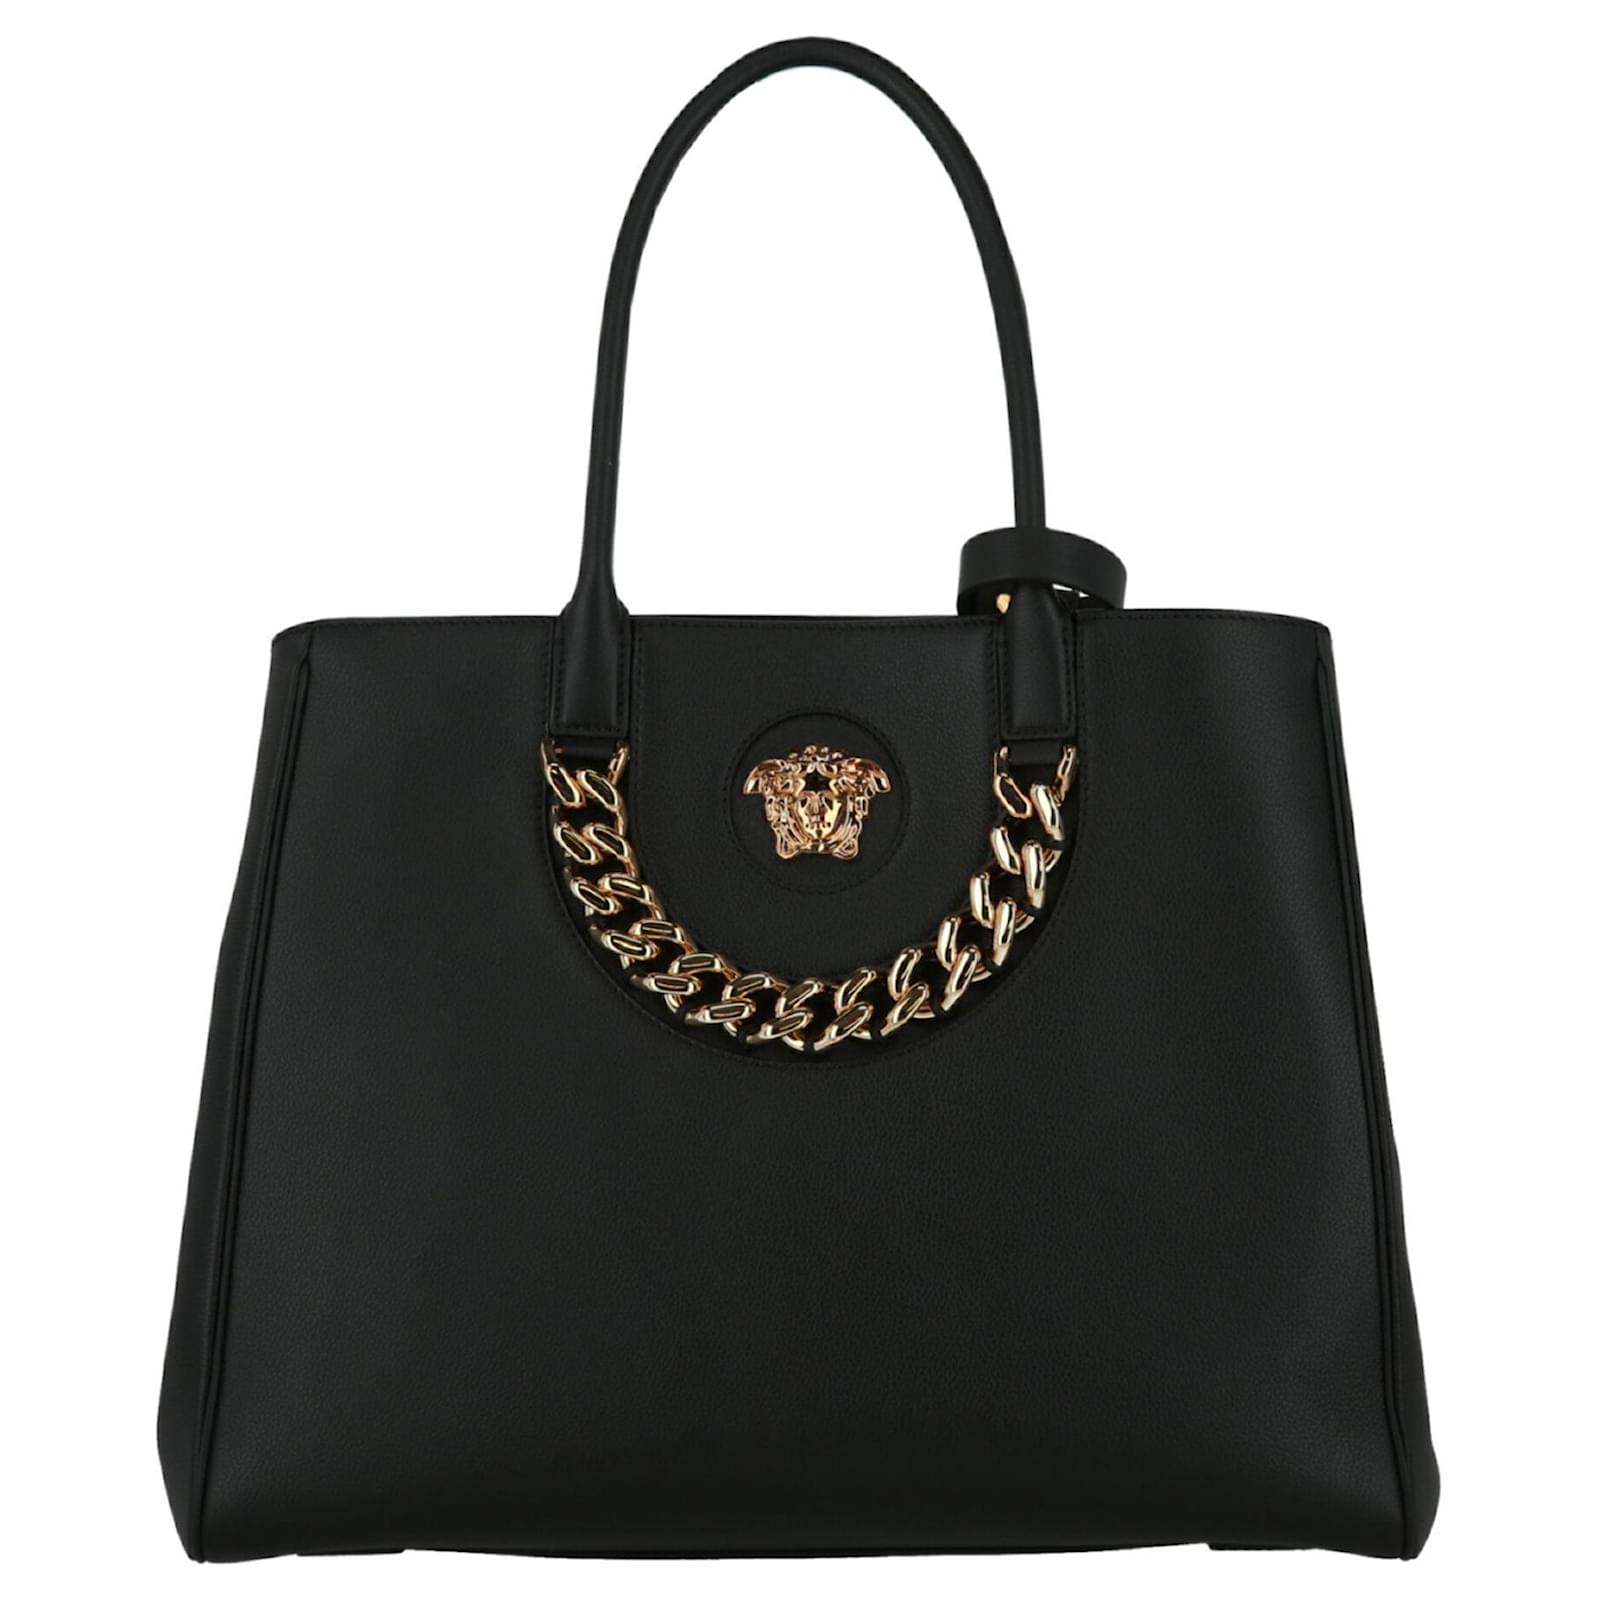 Versace La Madusa White & Black Large Tote Bag